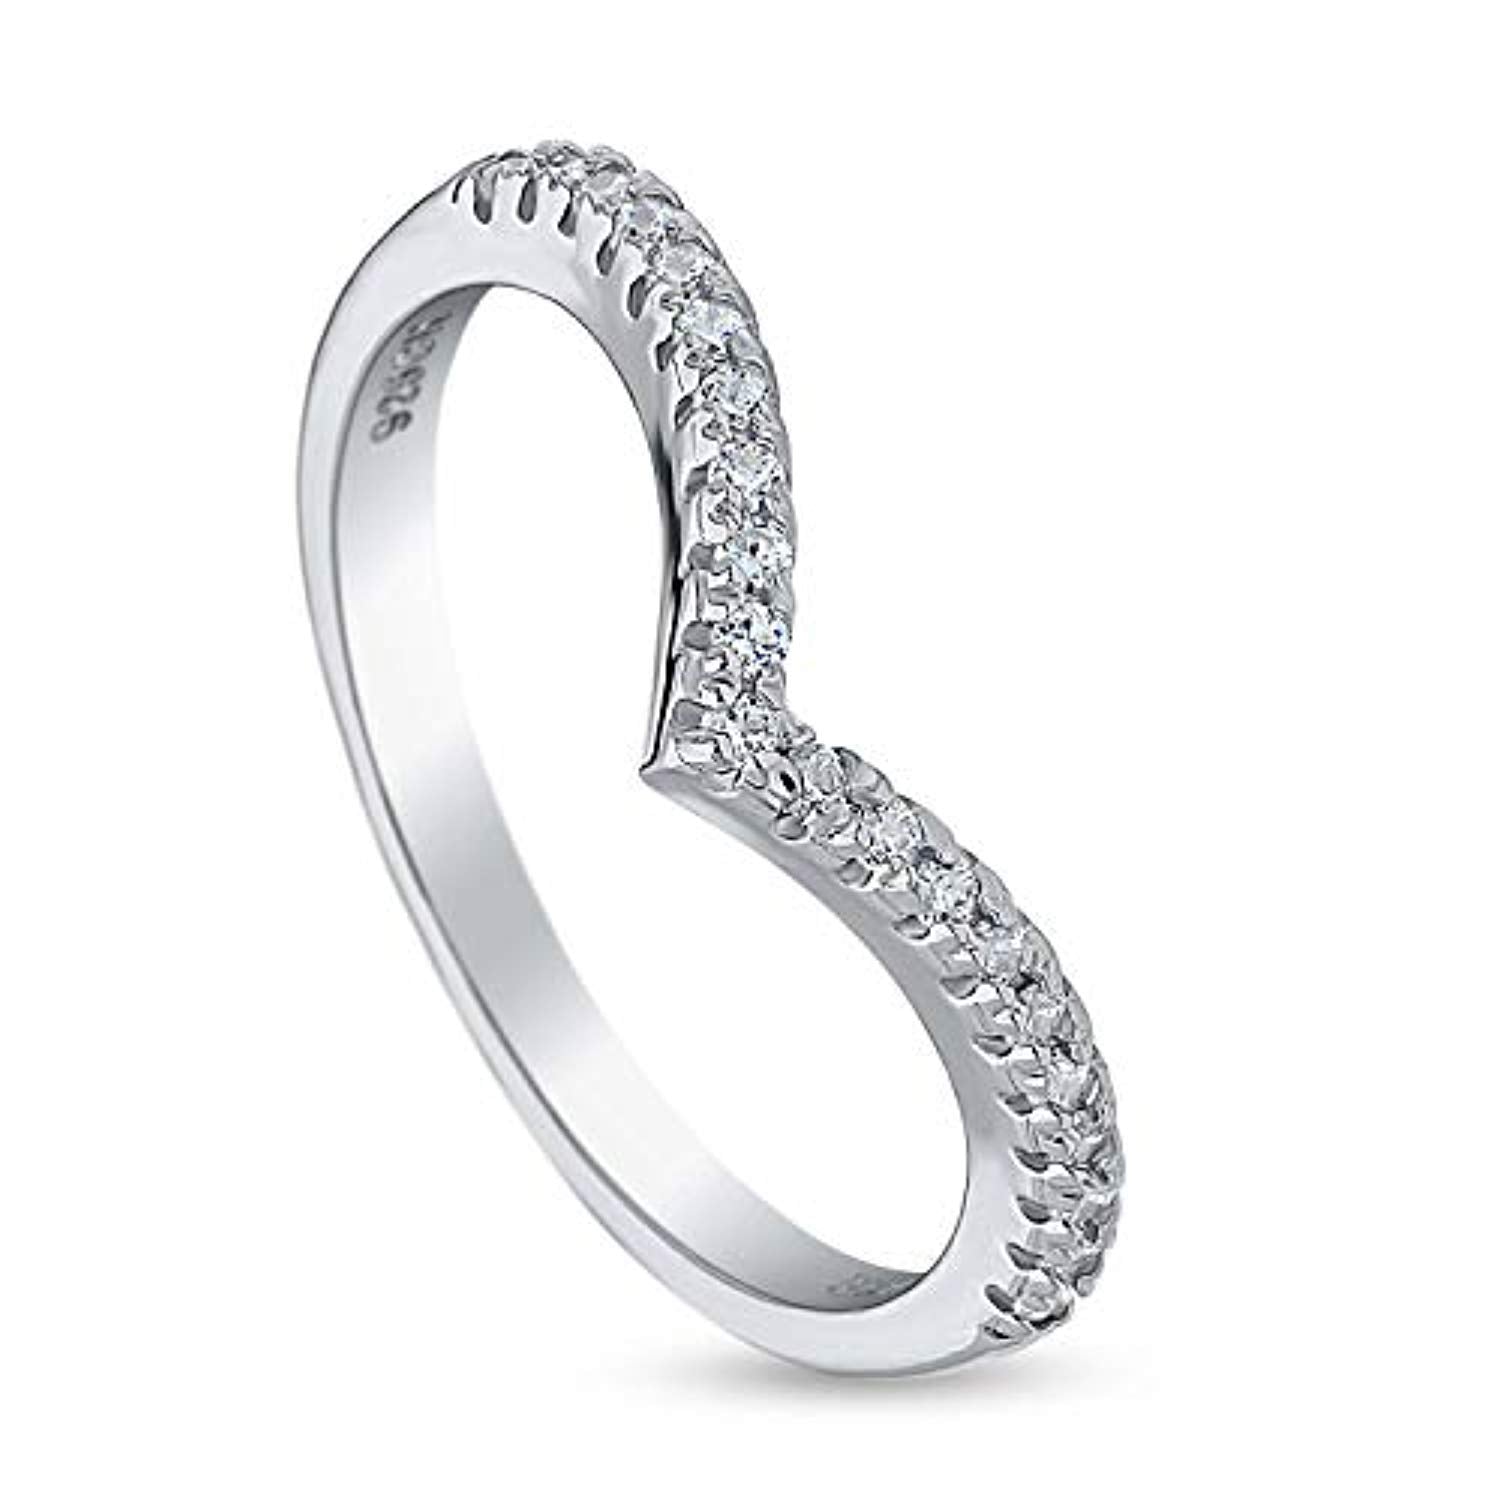 Infinity Design Swarovski Stone Silver Ring For Mother's Day - Gem O Sparkle